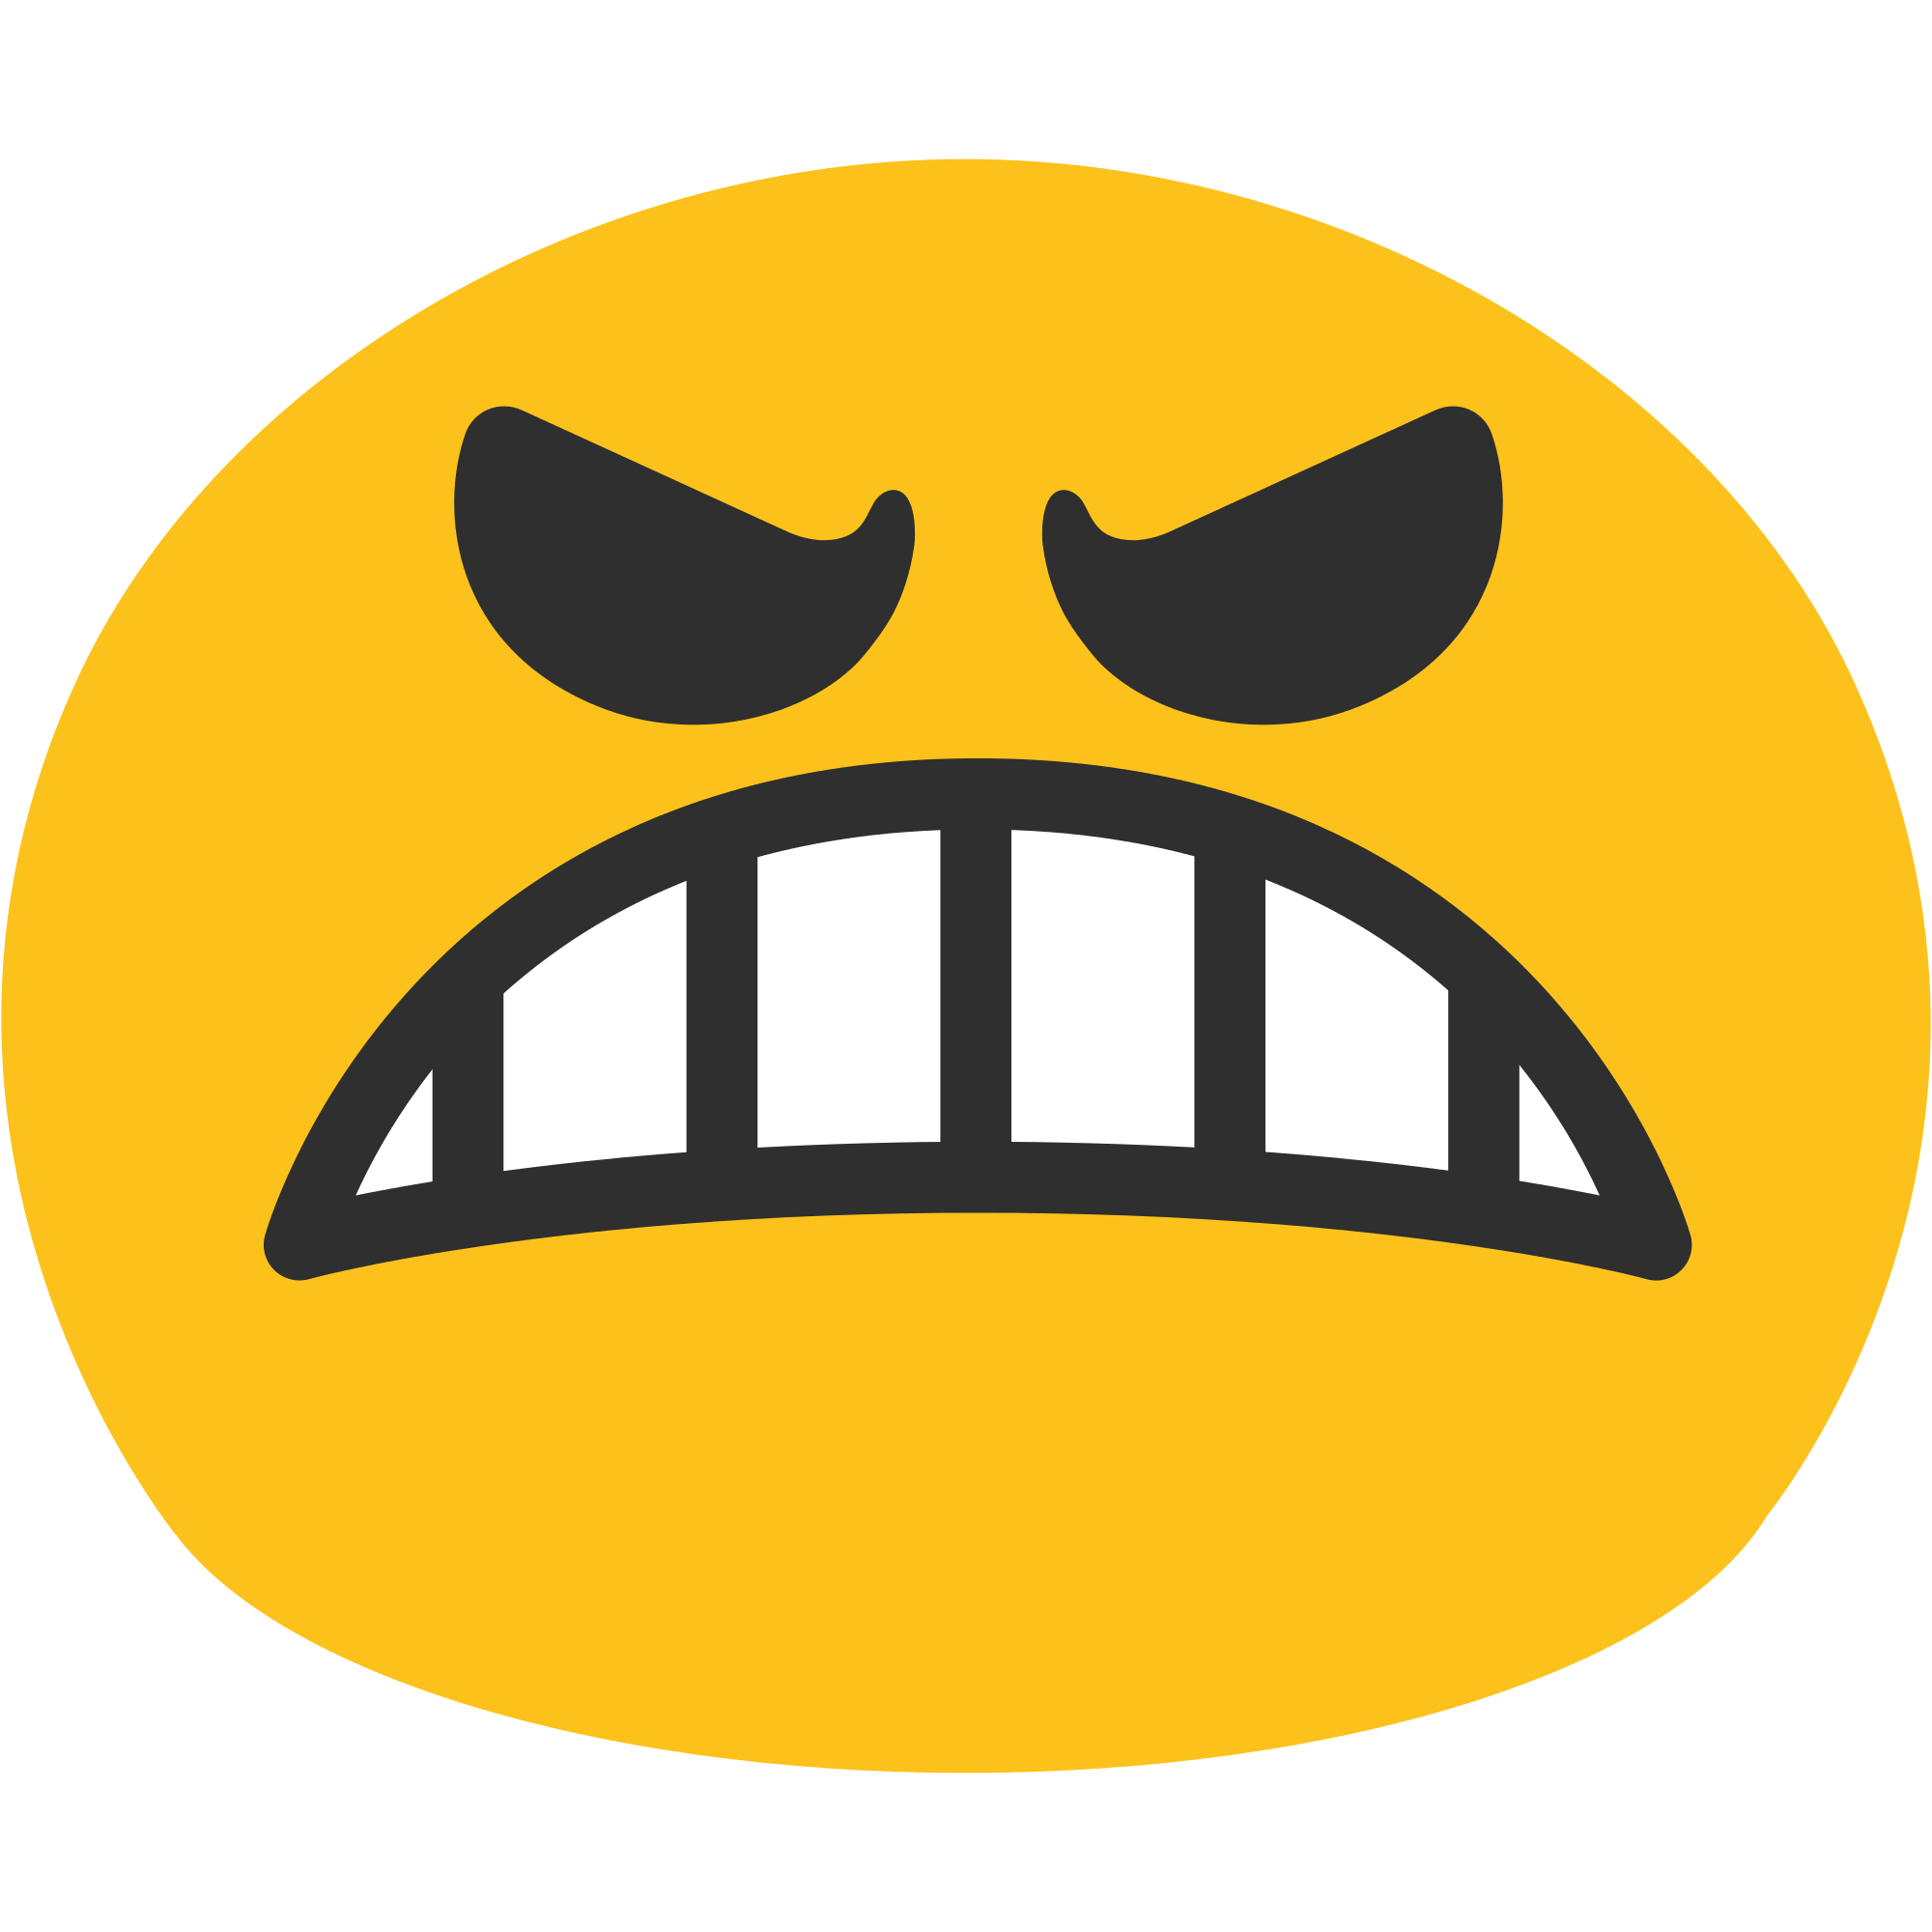 Angry Crying Emoji PNG High Quality Image PNG Arts